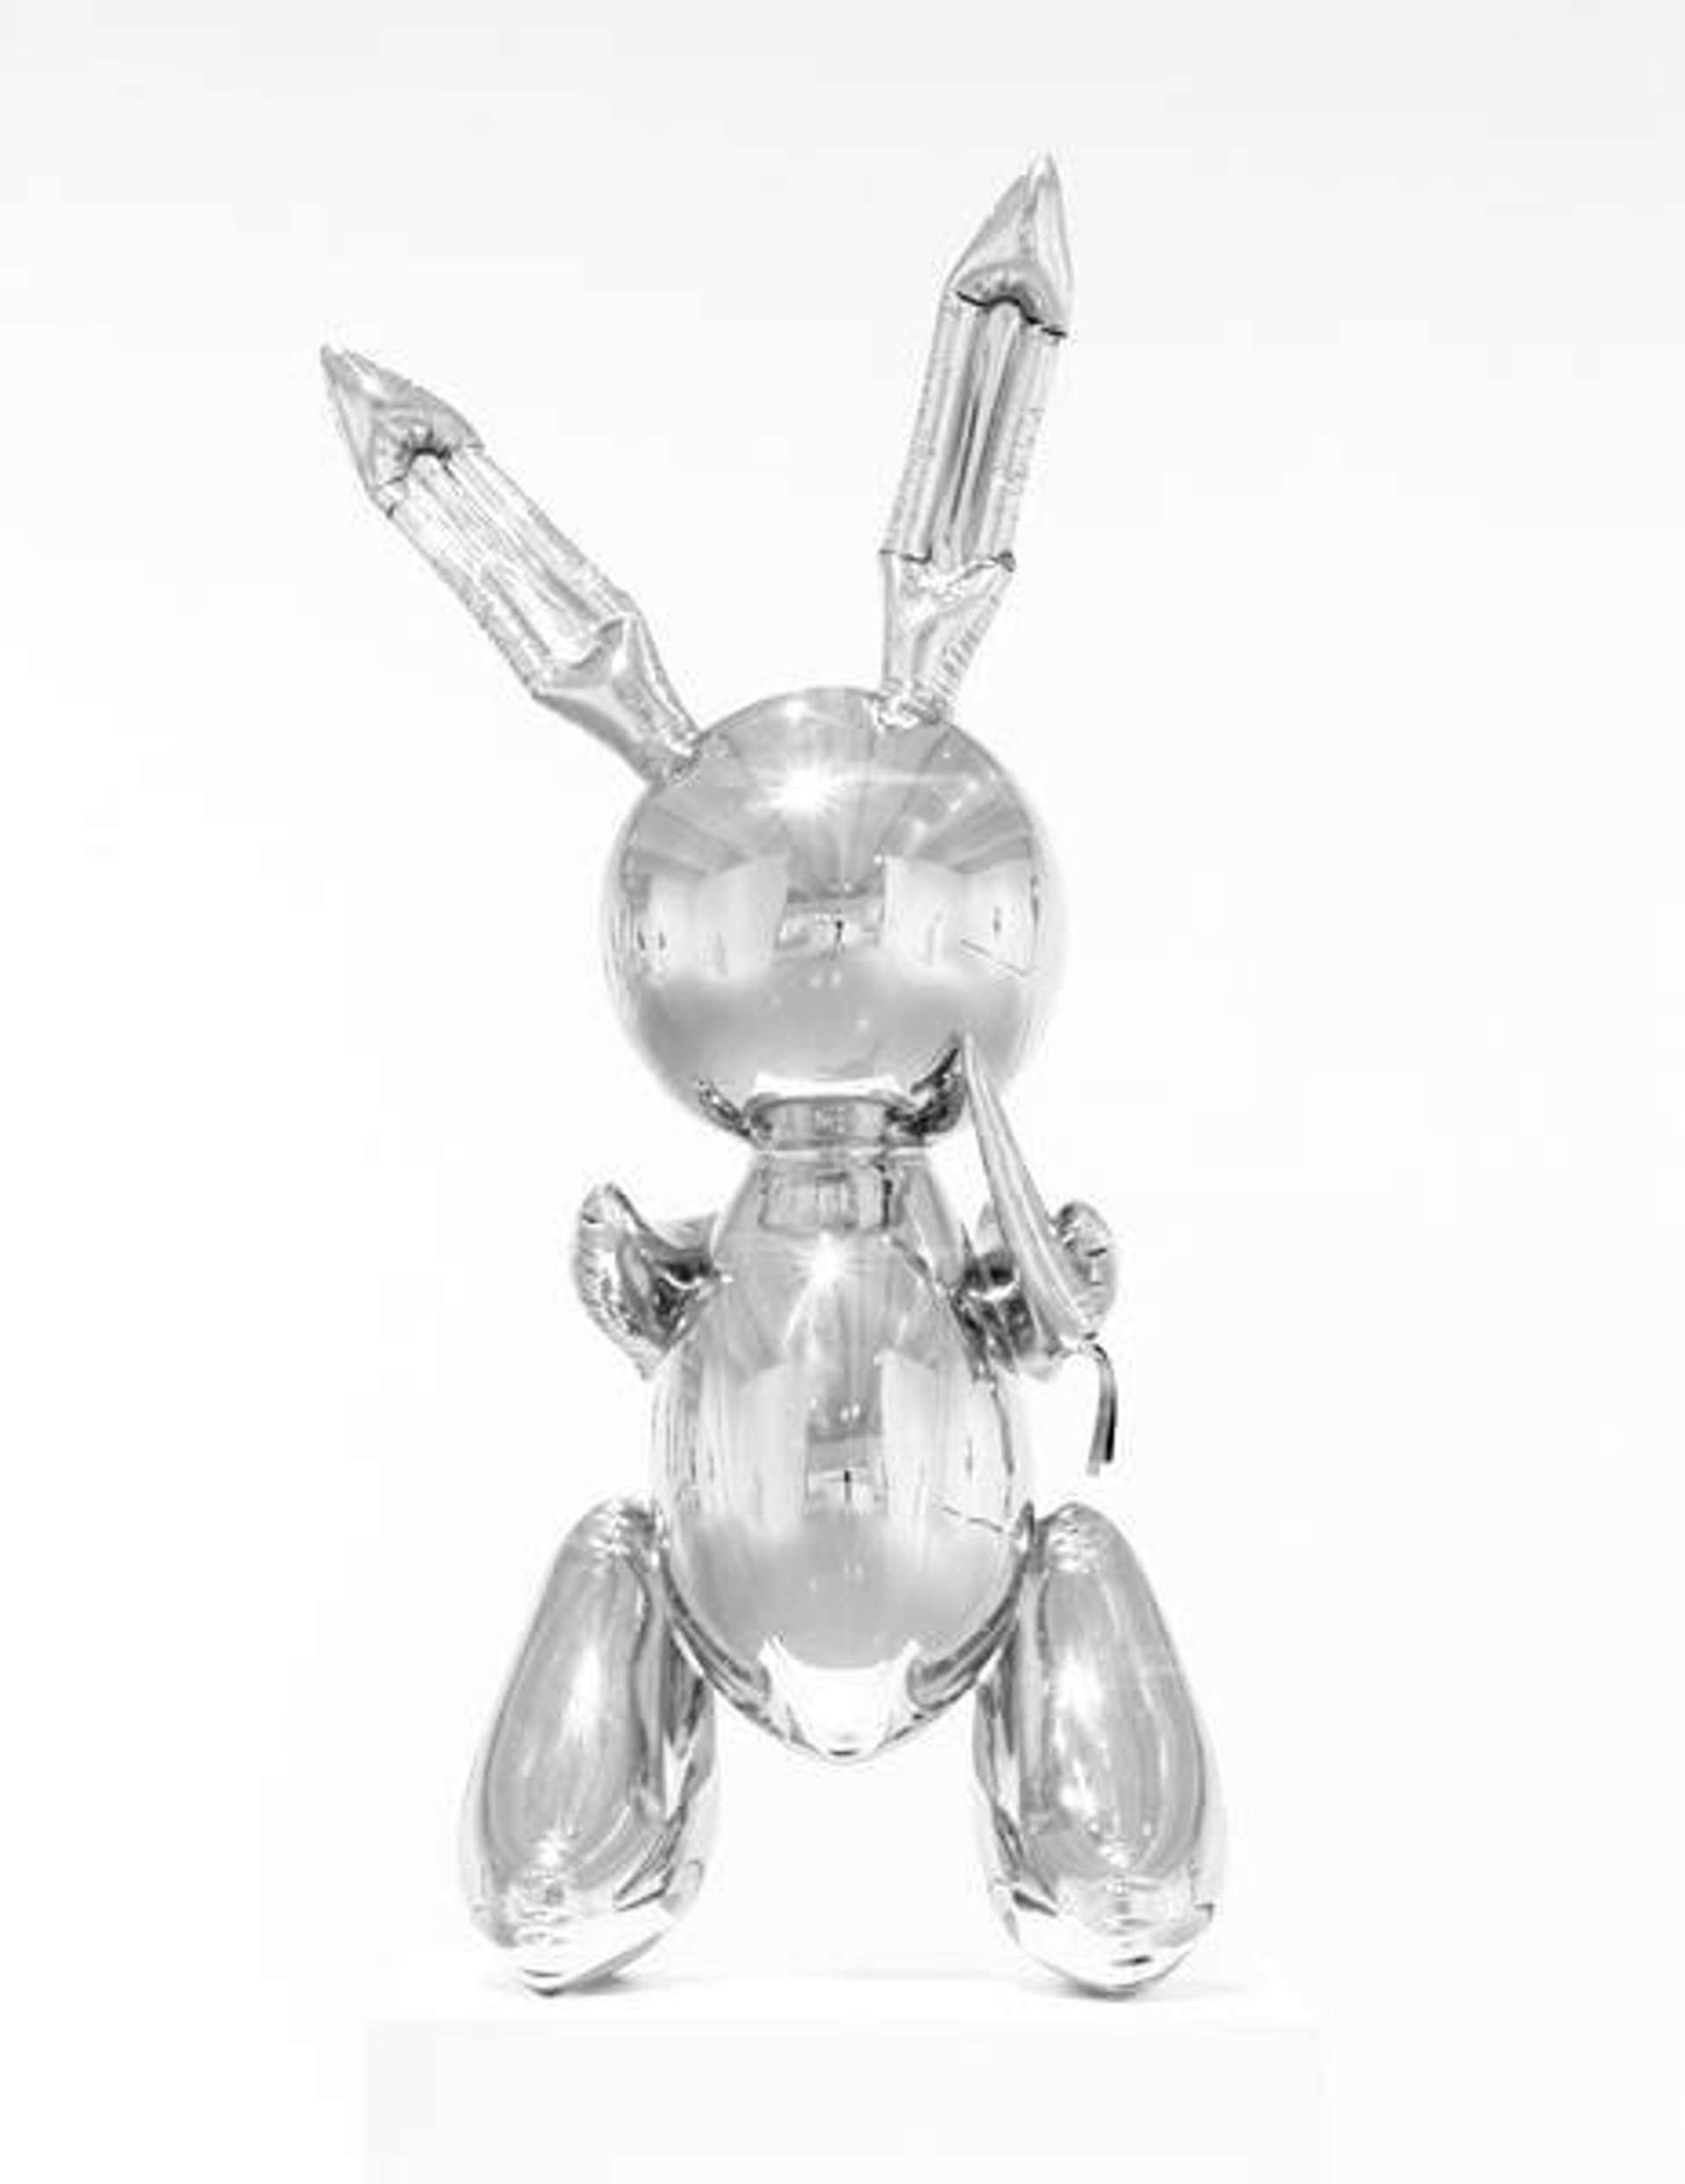 Jeff Koons’ Rabbit. An inflatable silver rabbit balloon sculpture on a white pedestal.